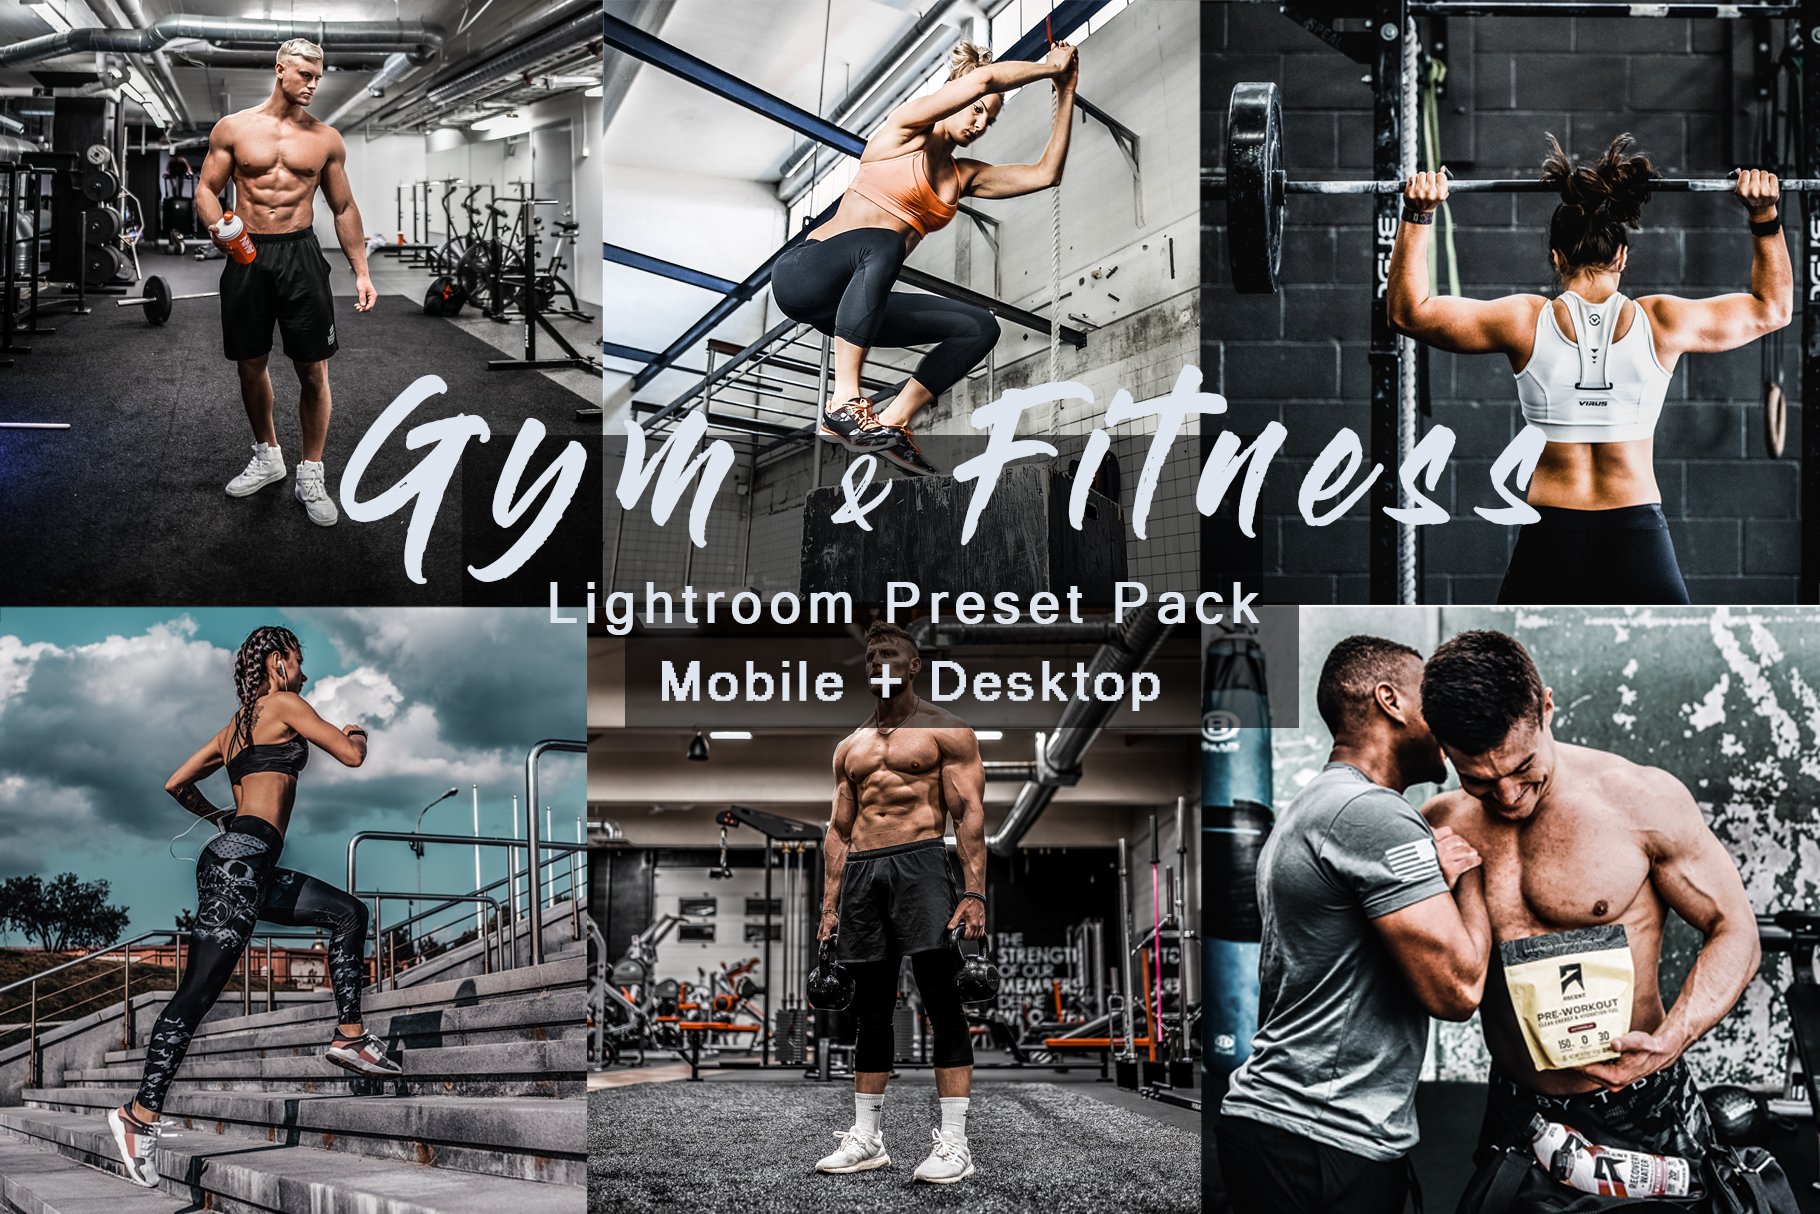 Gym & Fitness | Lightroom Presetscover image.